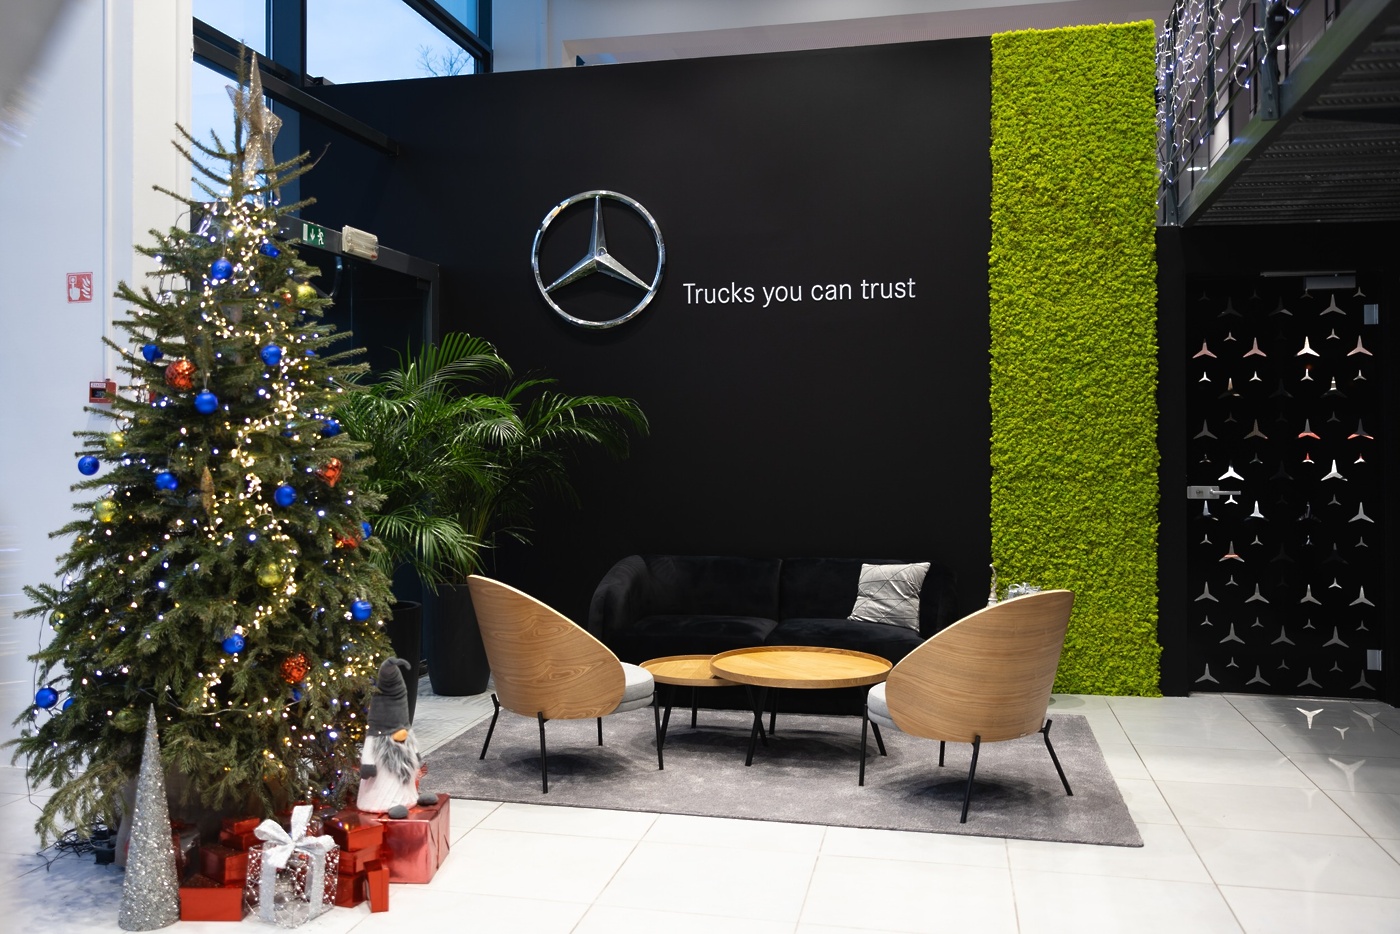 Autocommerce salon Mercedes-Benz Trucks